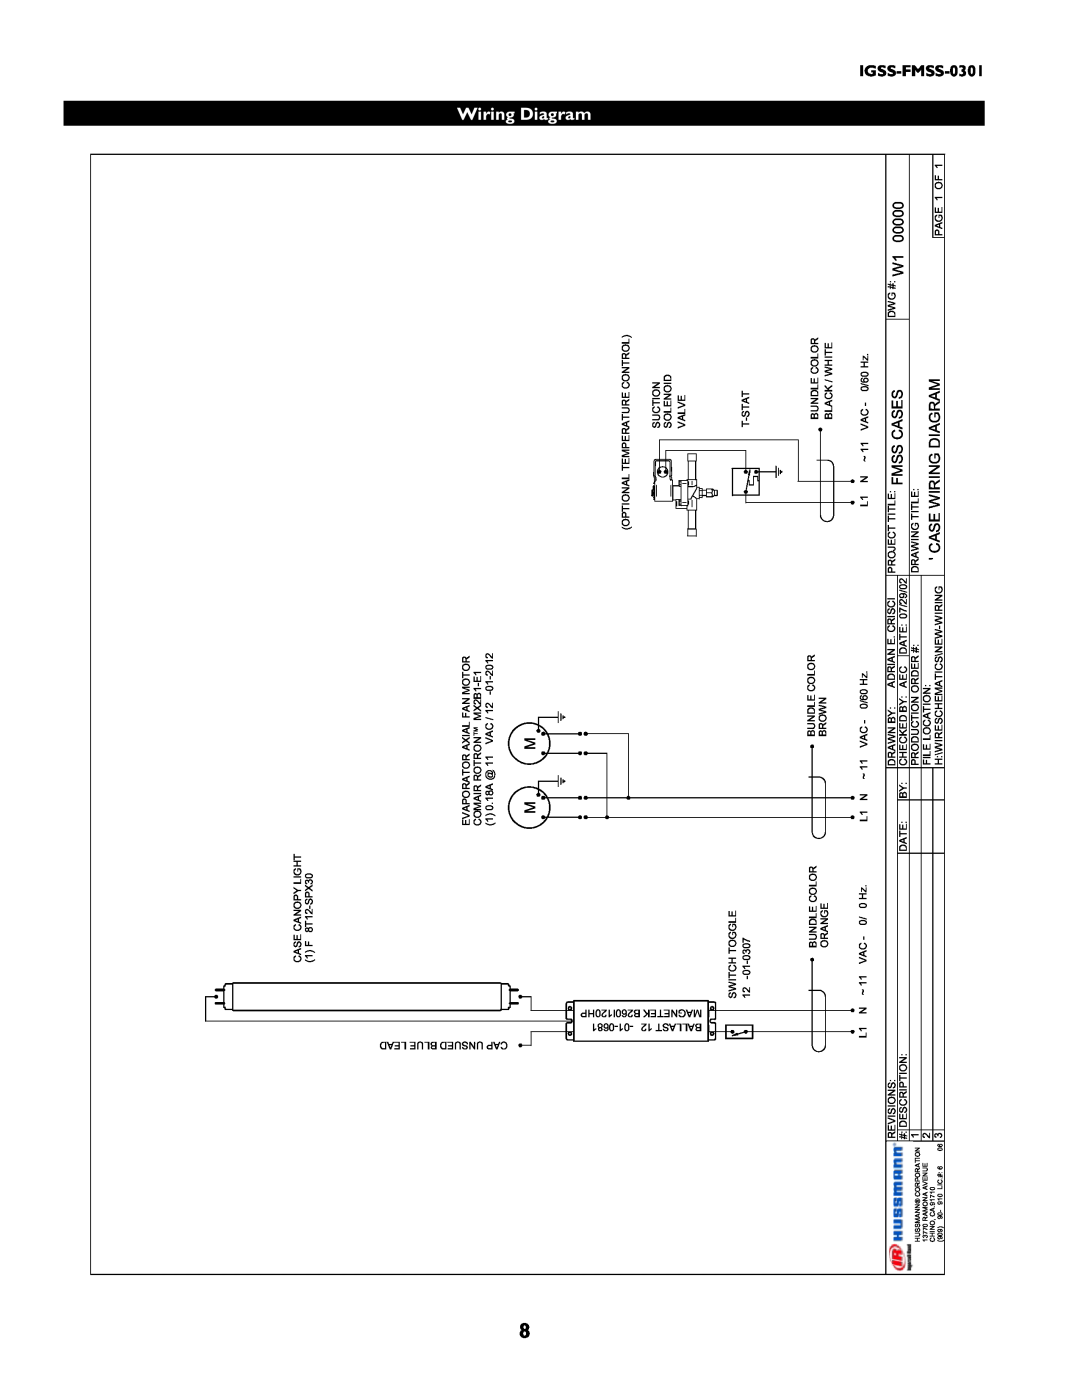 hussman IGSS-FMSS-0301 manual Wiring Diagram, Fmsscases, Casewiringdiagram 